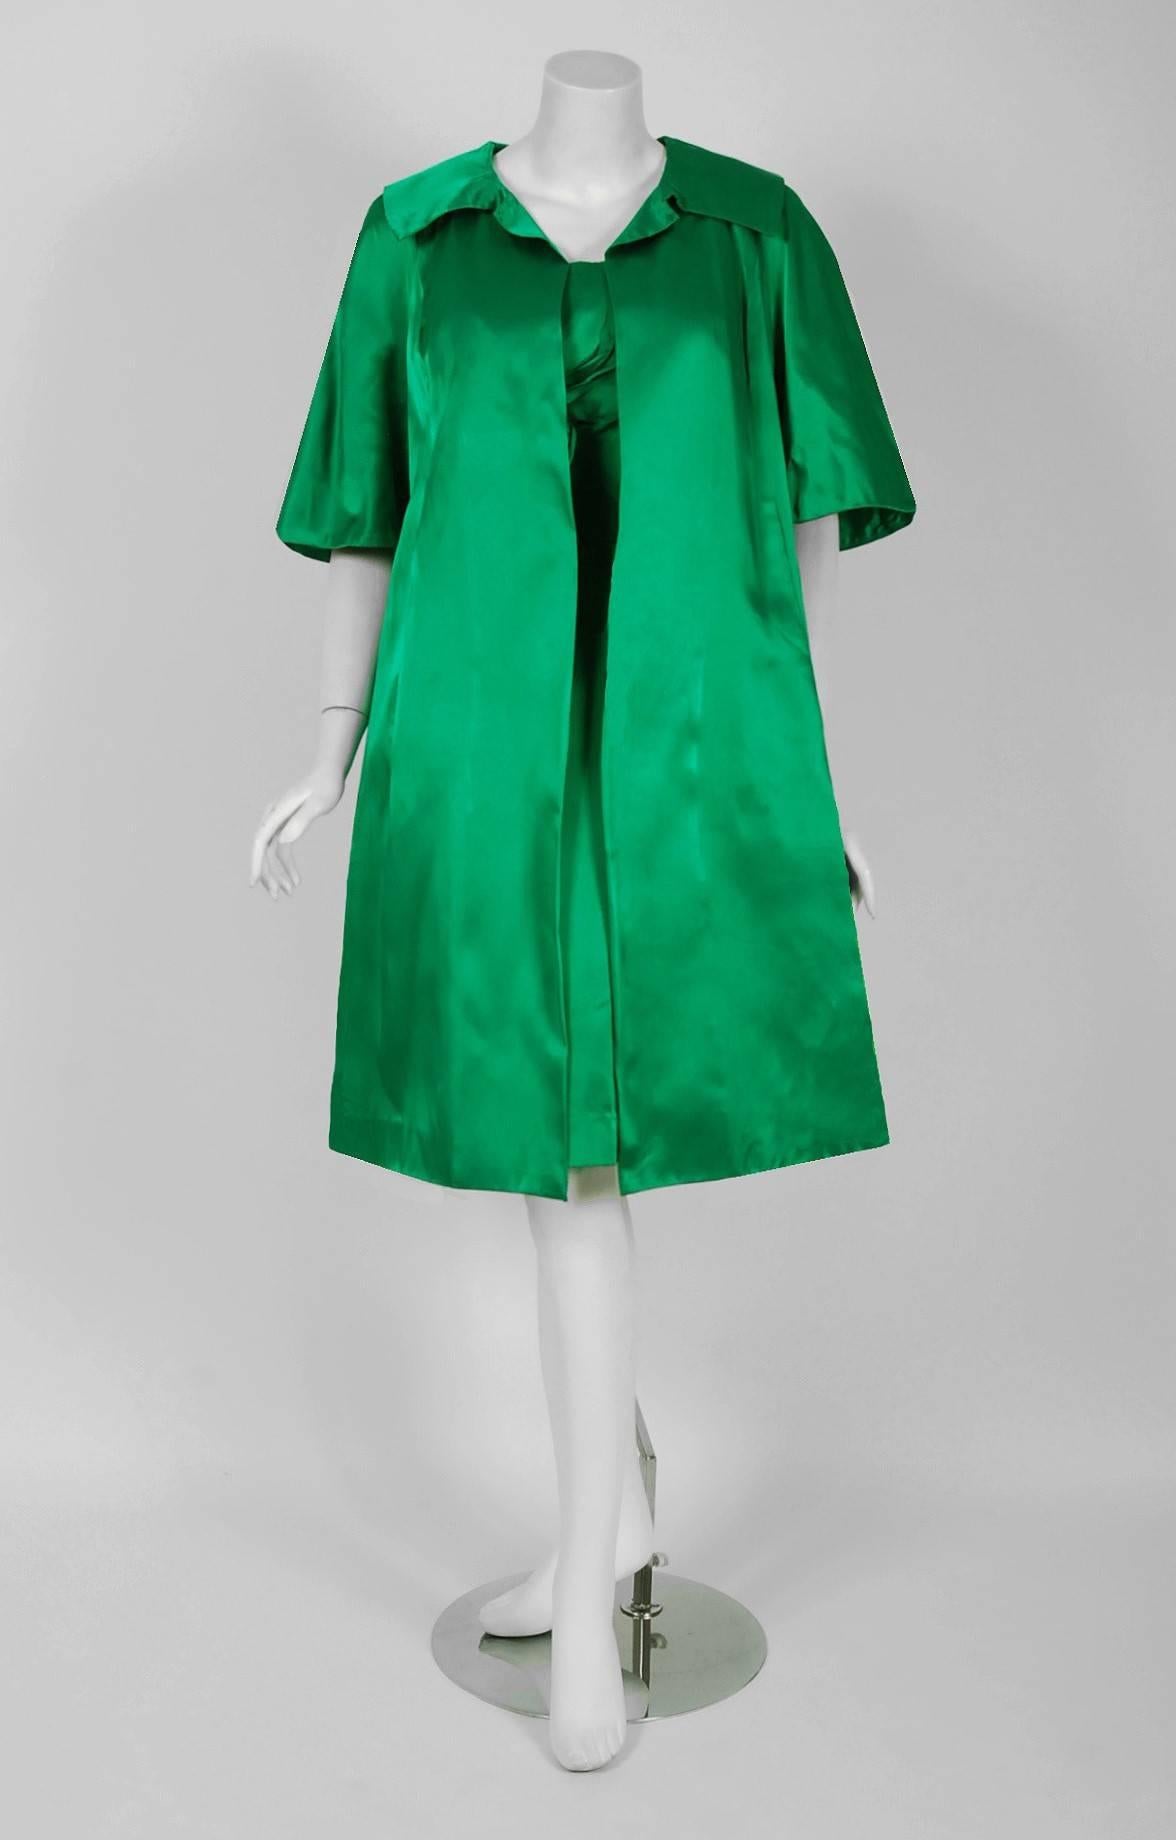 green applique dress